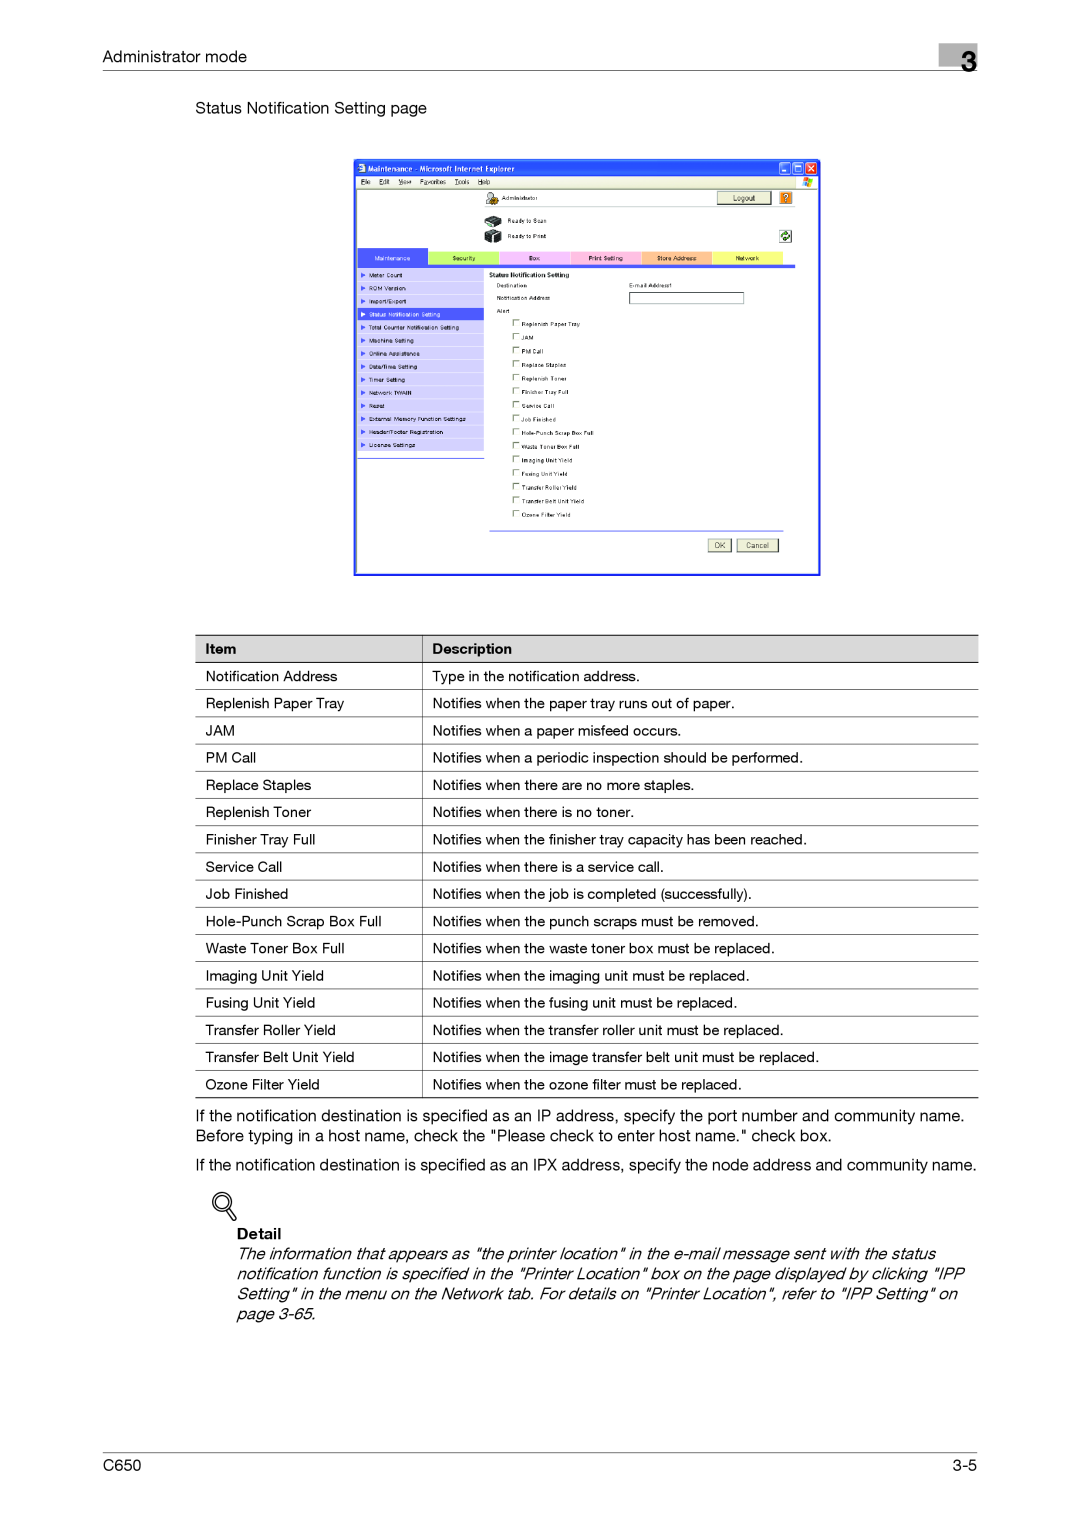 Konica Minolta C650 manual Status Notification Setting page, Administrator mode 